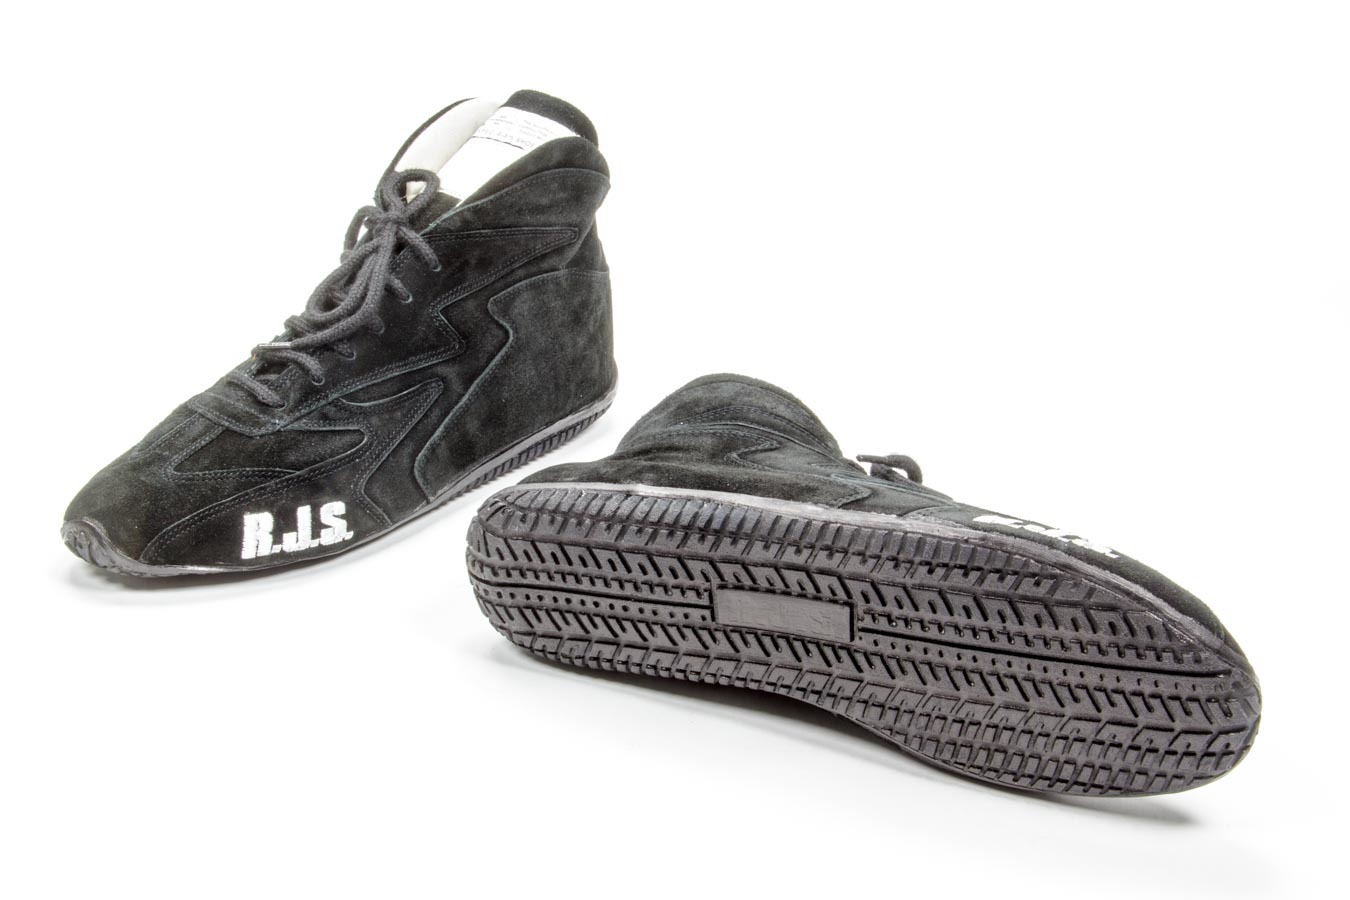 RJS, Redline Racing Shoe Mid-Top Black Size 14 SFI-5